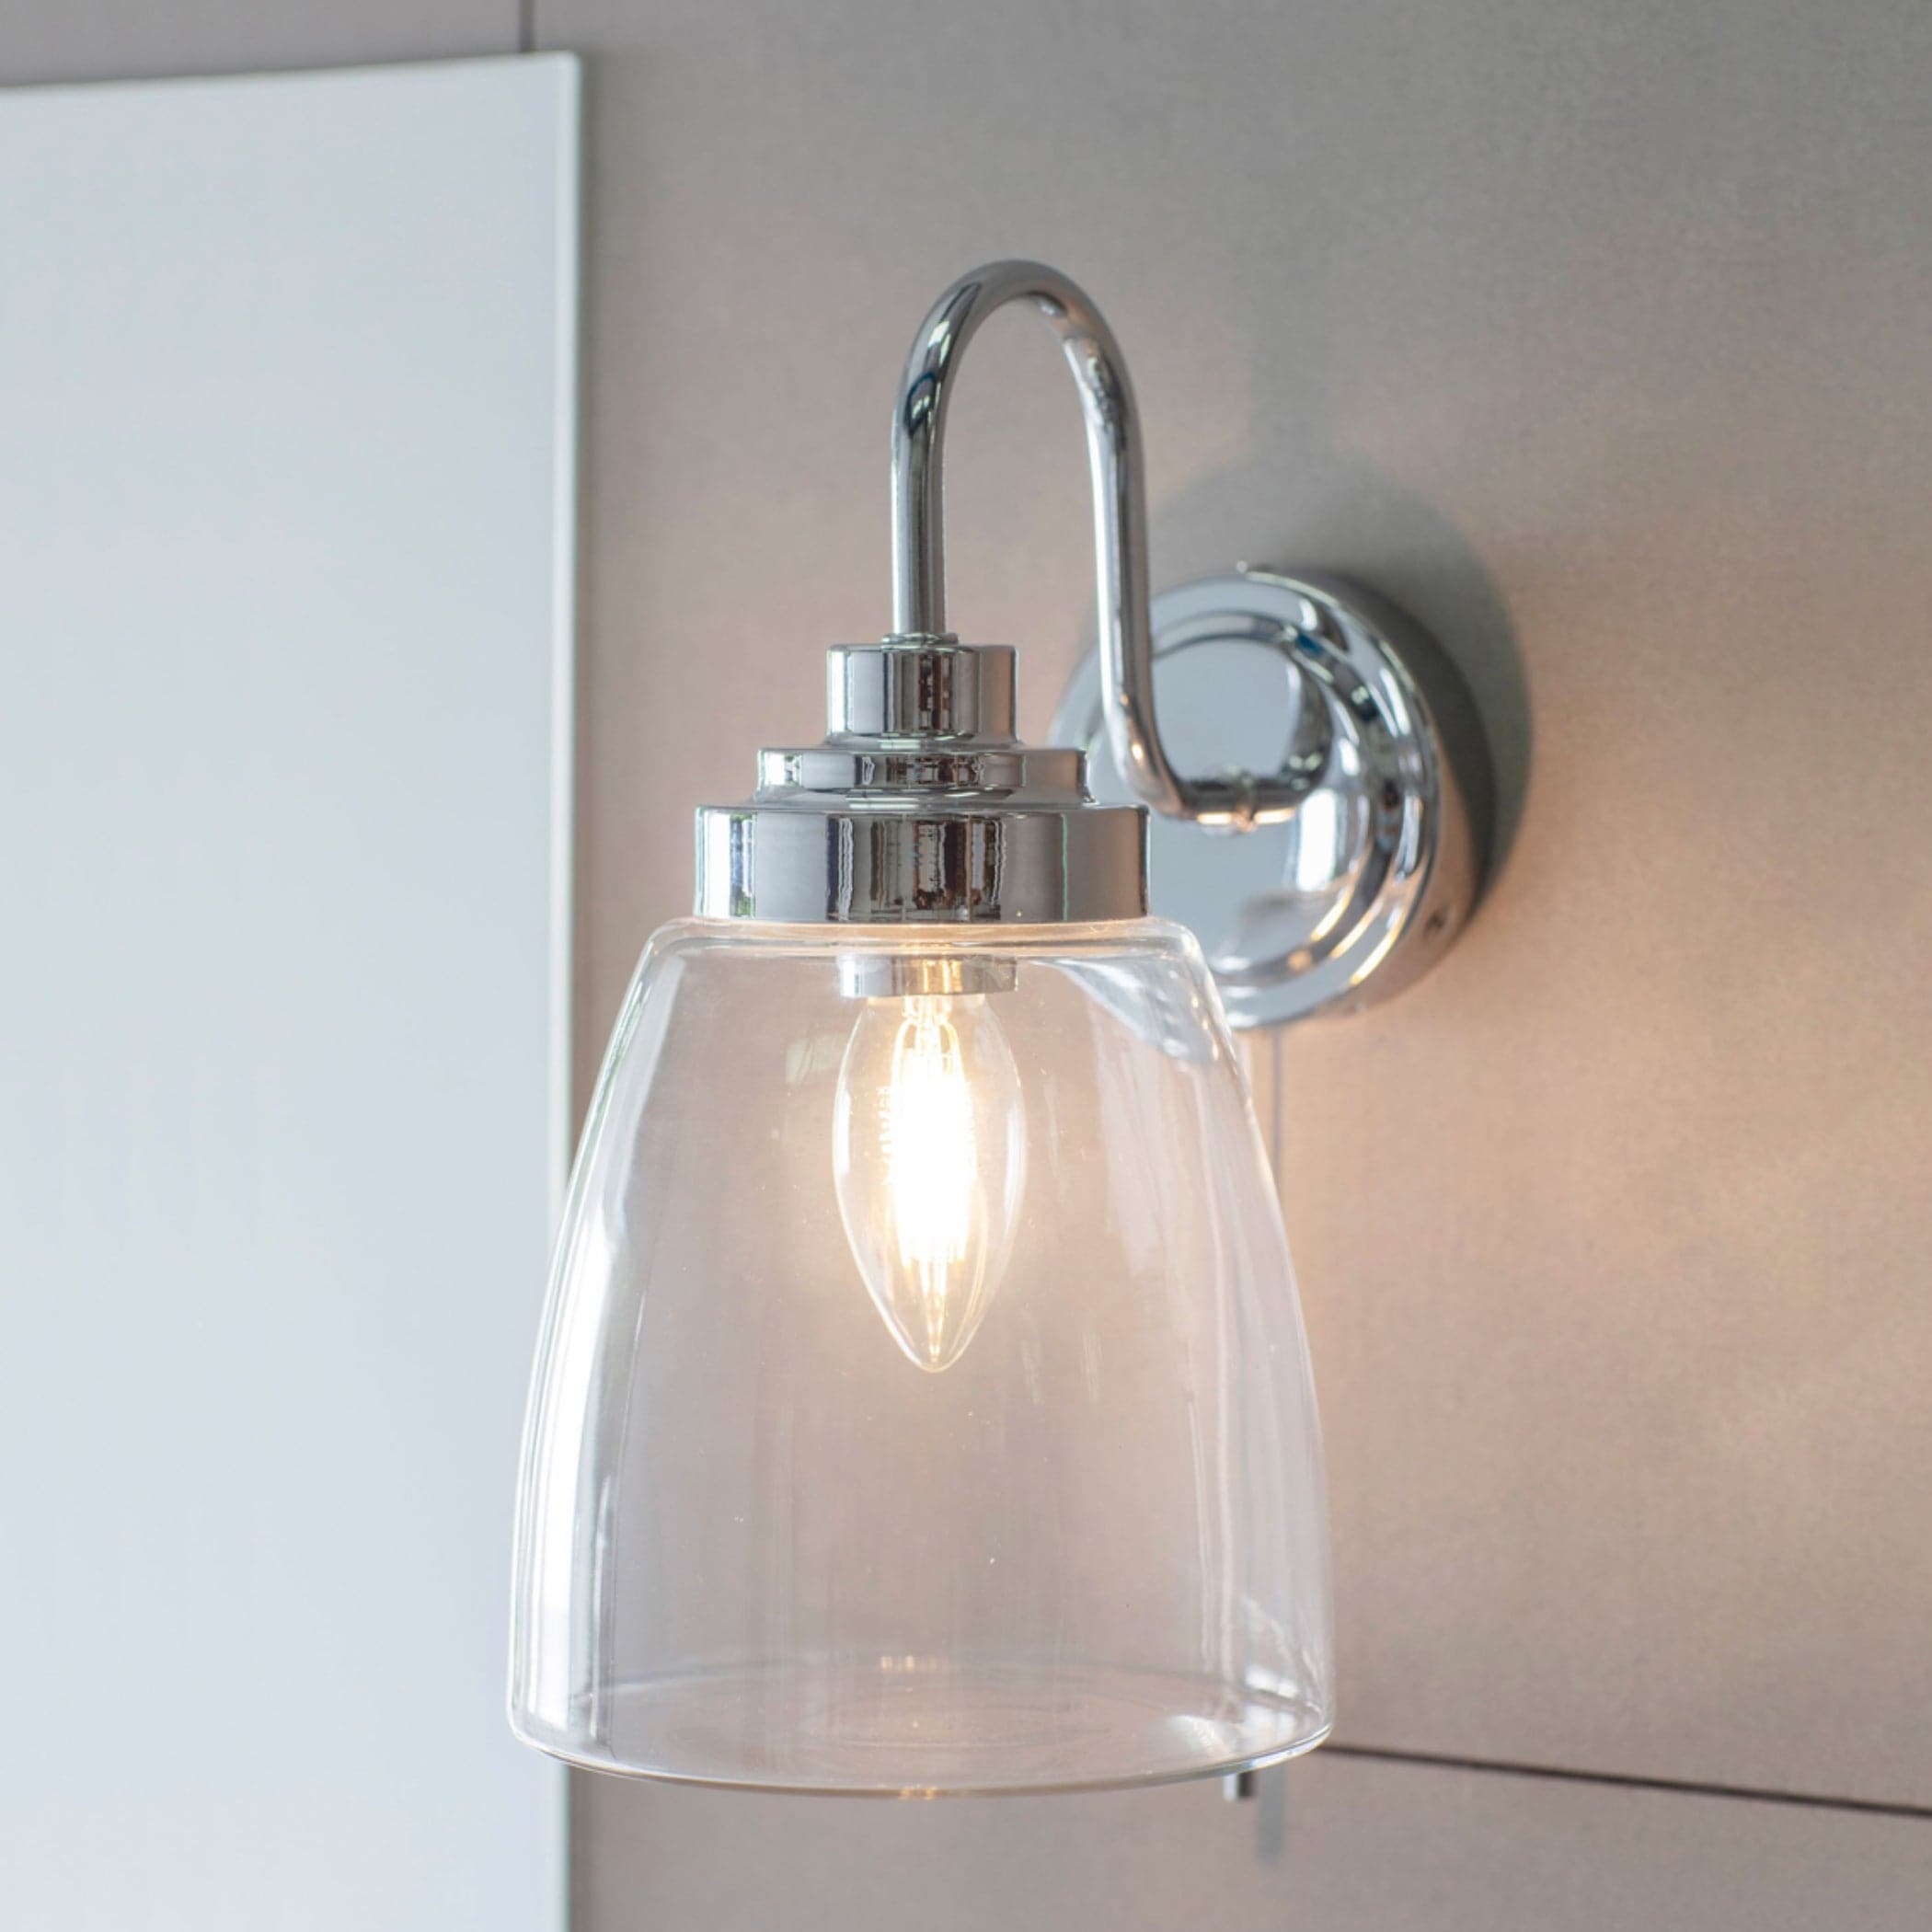 Chrome and Clear Glass Shade Bathroom Wall Light